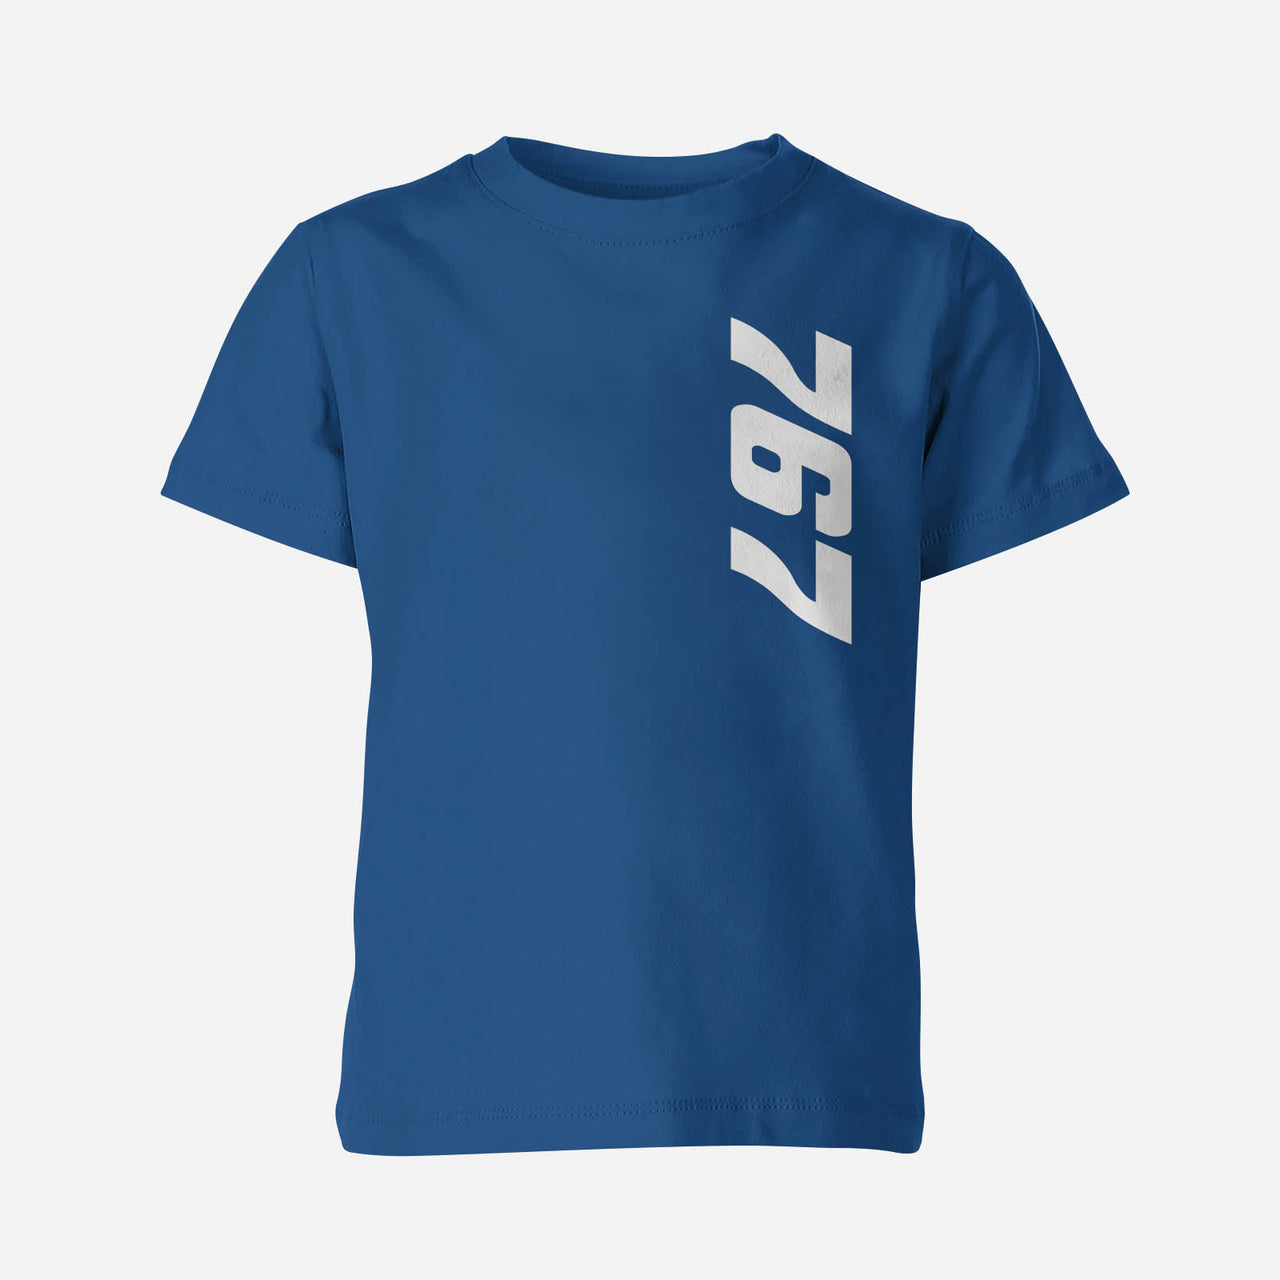 767 Side Text Designed Children T-Shirts